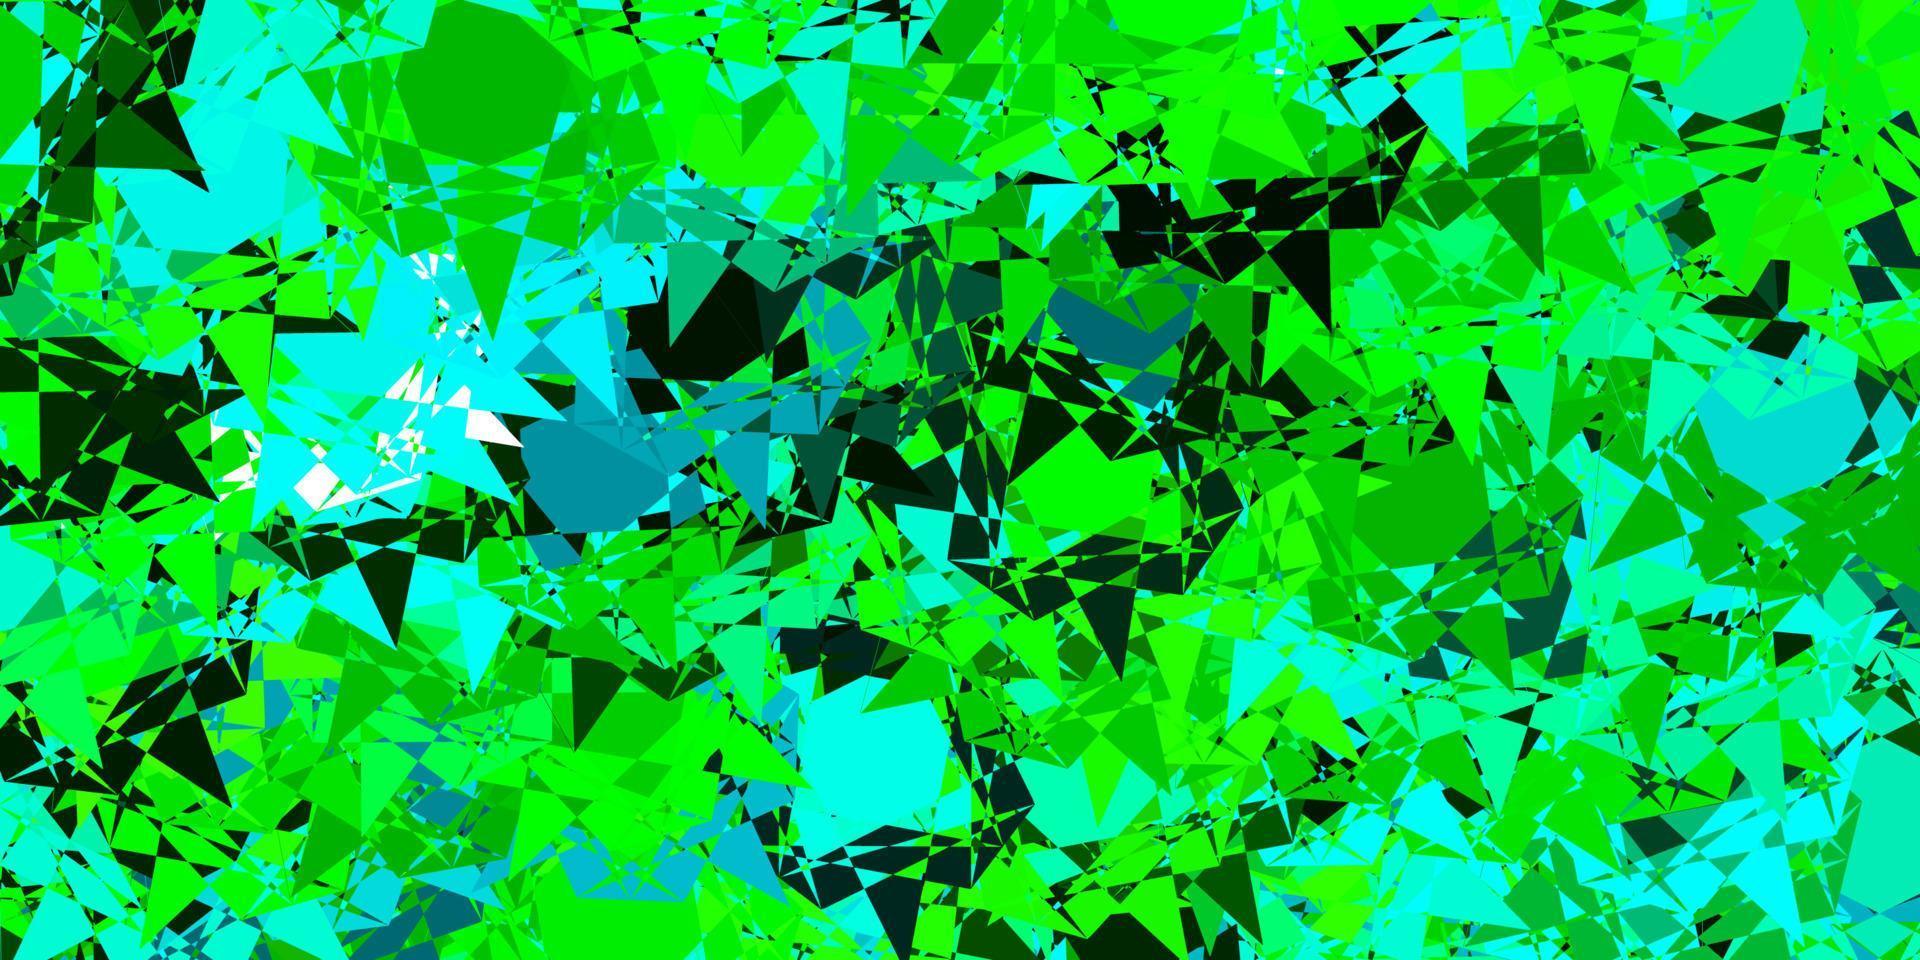 hellblaue, grüne Vektorschablone mit Dreiecksformen. vektor